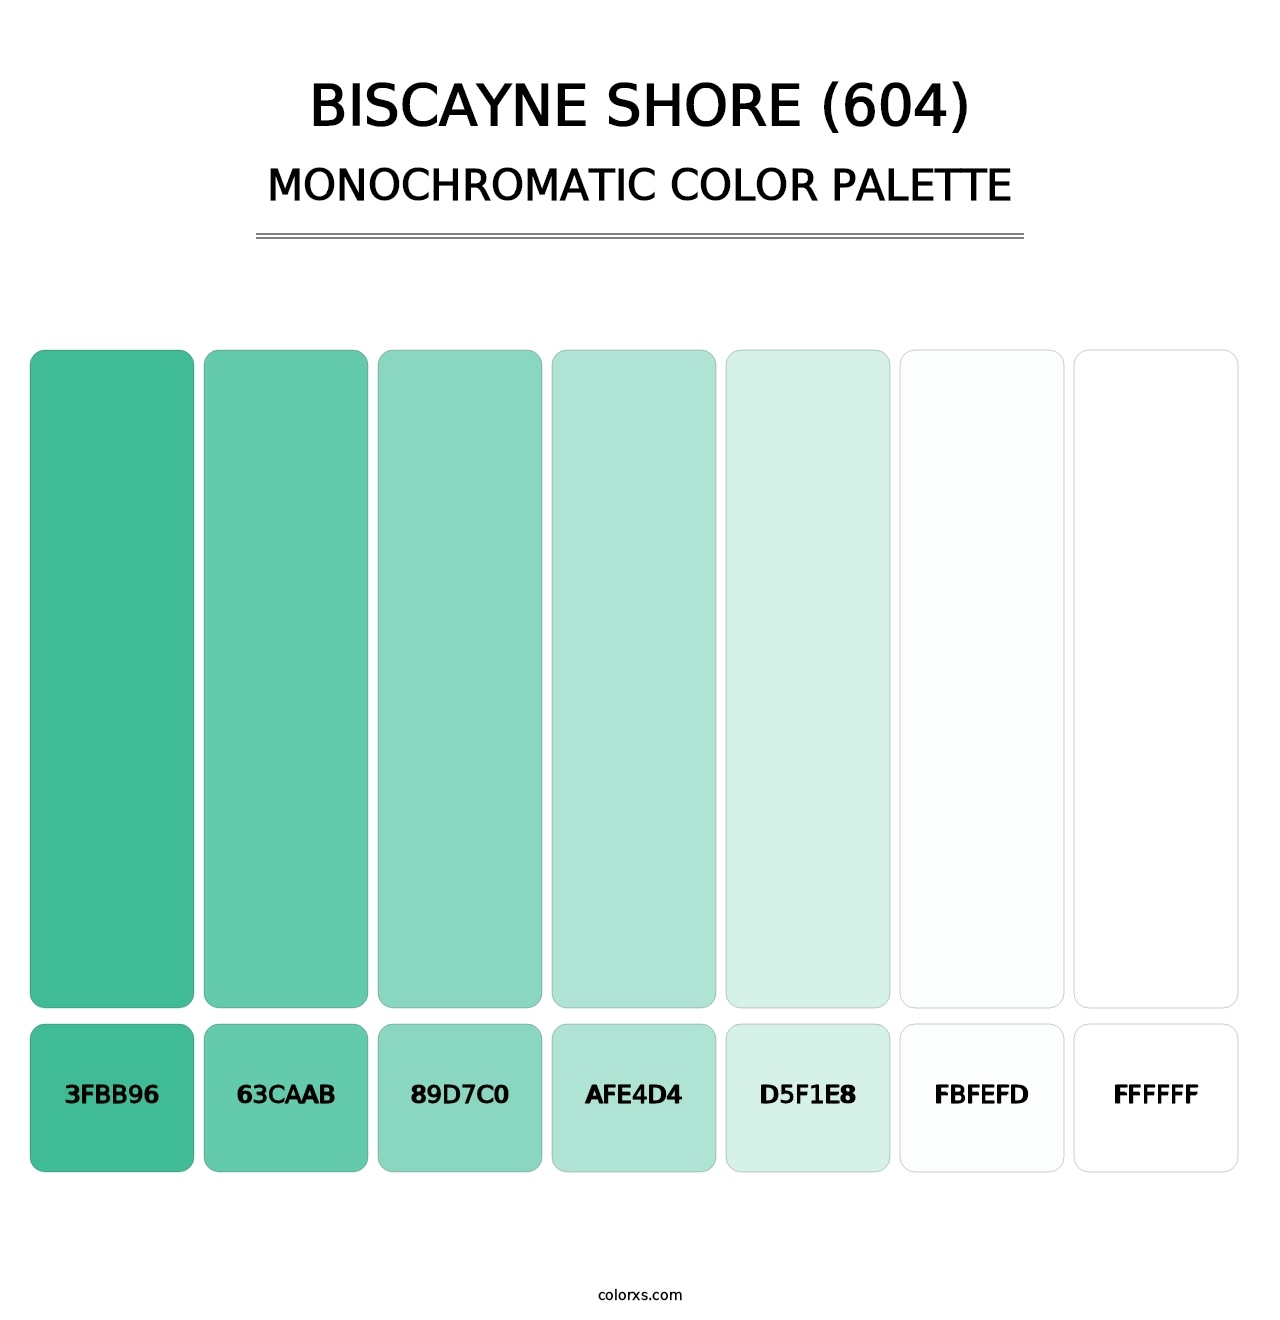 Biscayne Shore (604) - Monochromatic Color Palette